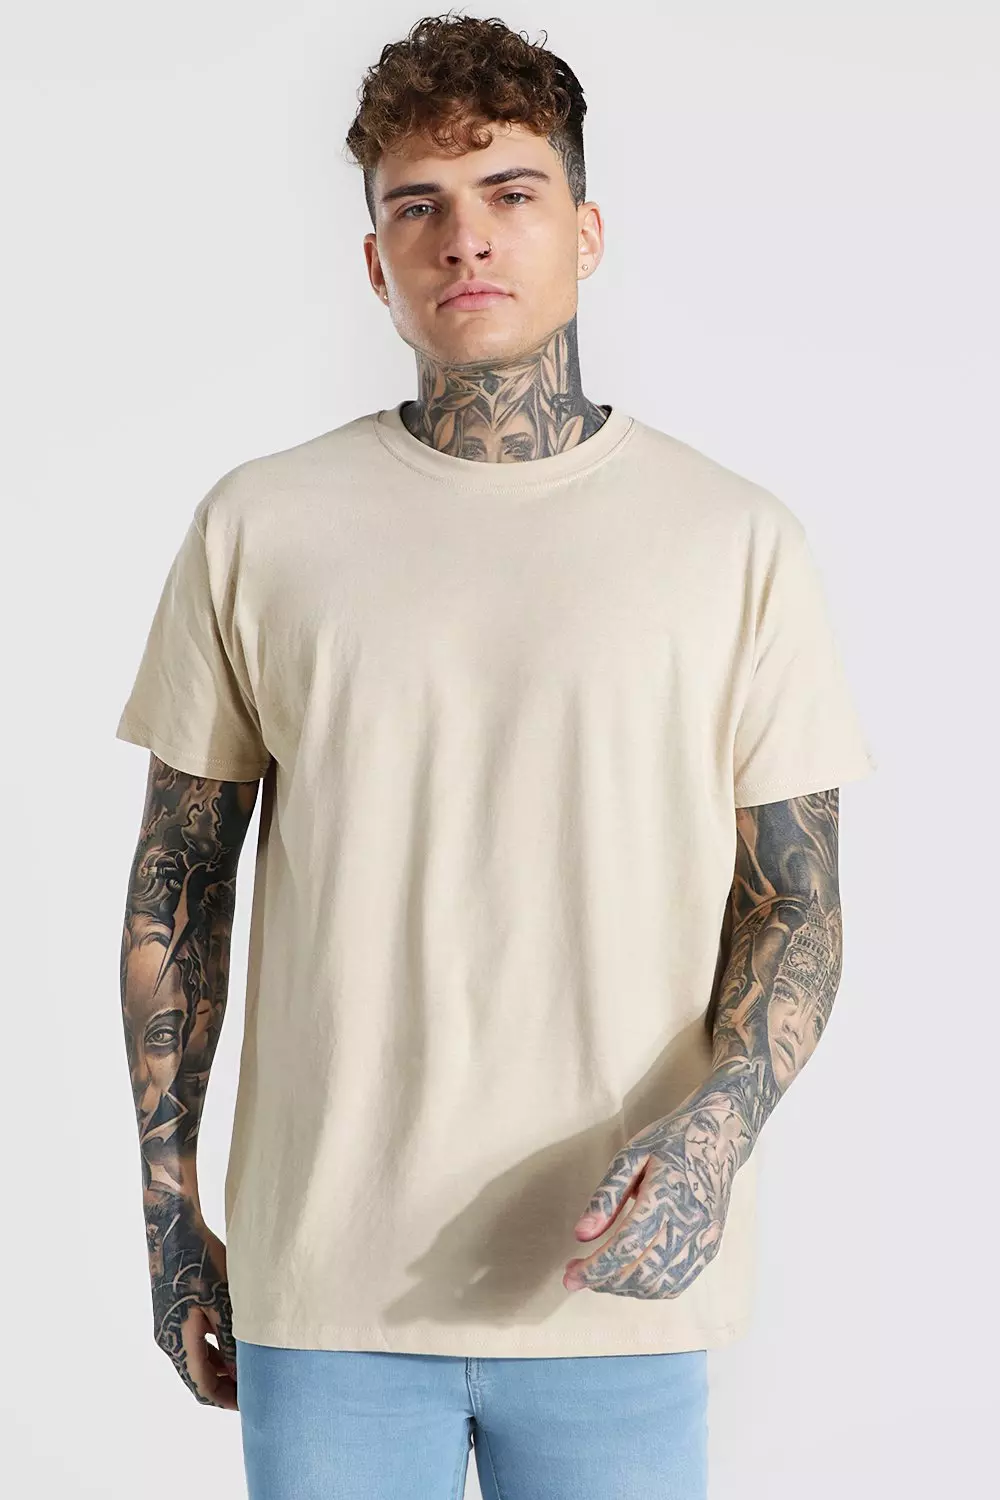 Boohoo Shirt Mens Medium Tee Striped Los Angeles LA Ca Oversize